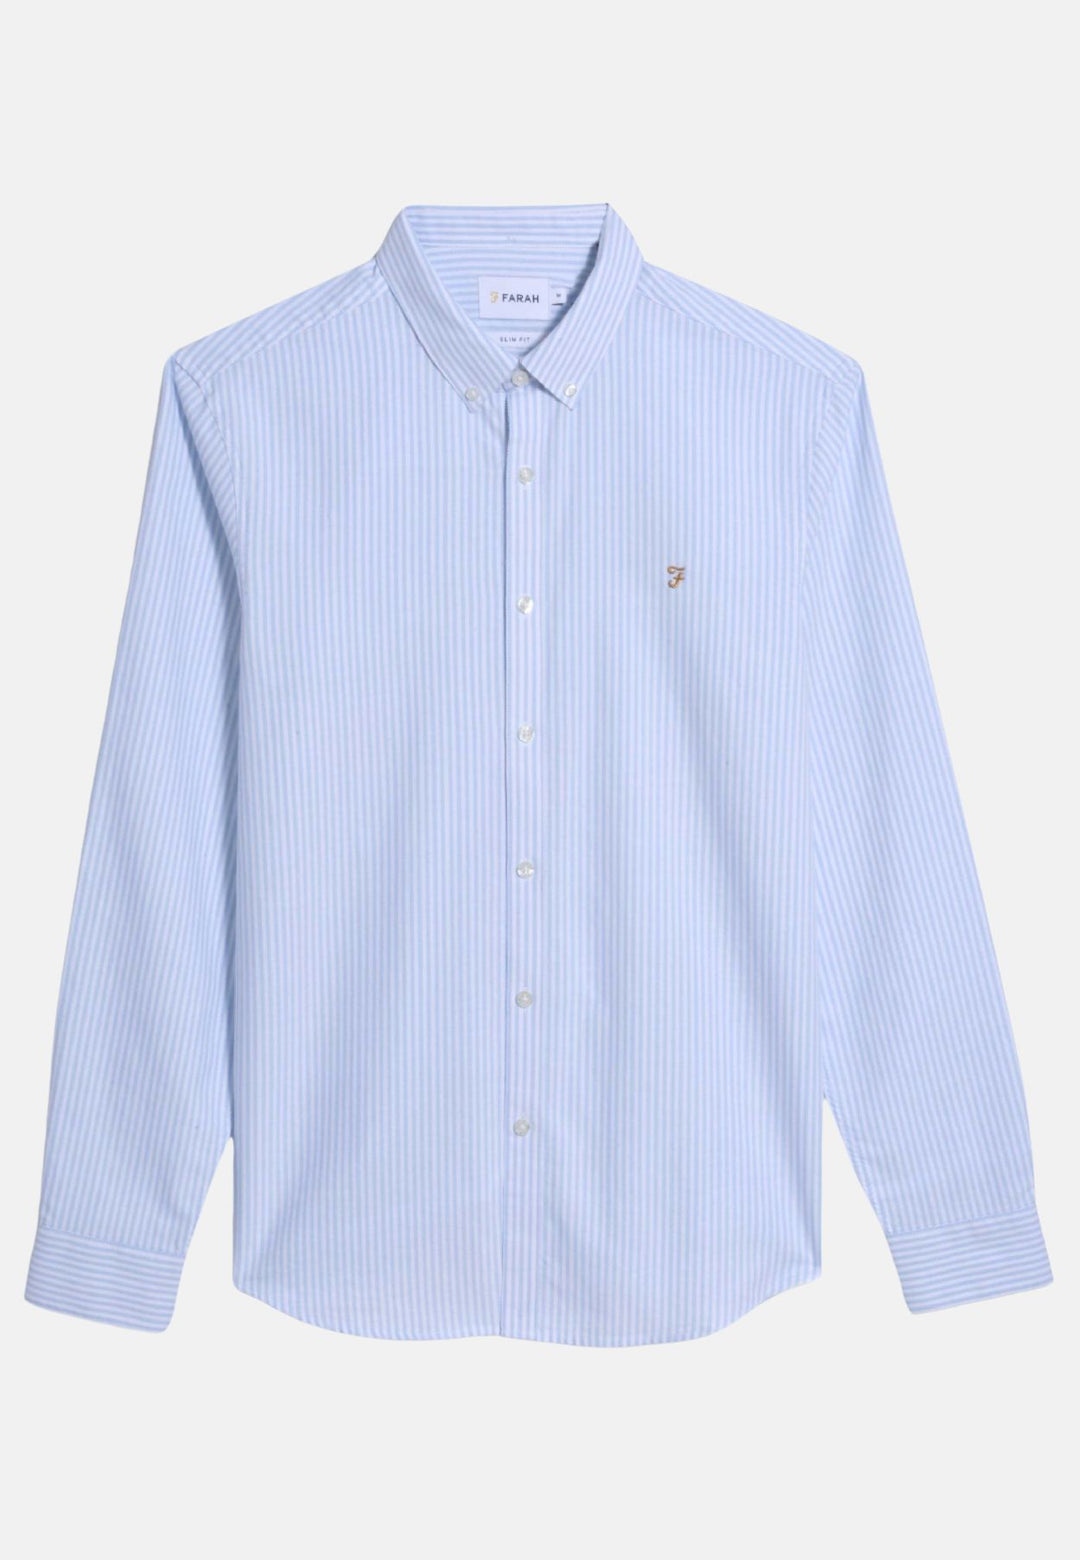 Men's Farah Brewer Oxford Shirt in Sky Blue Stripe